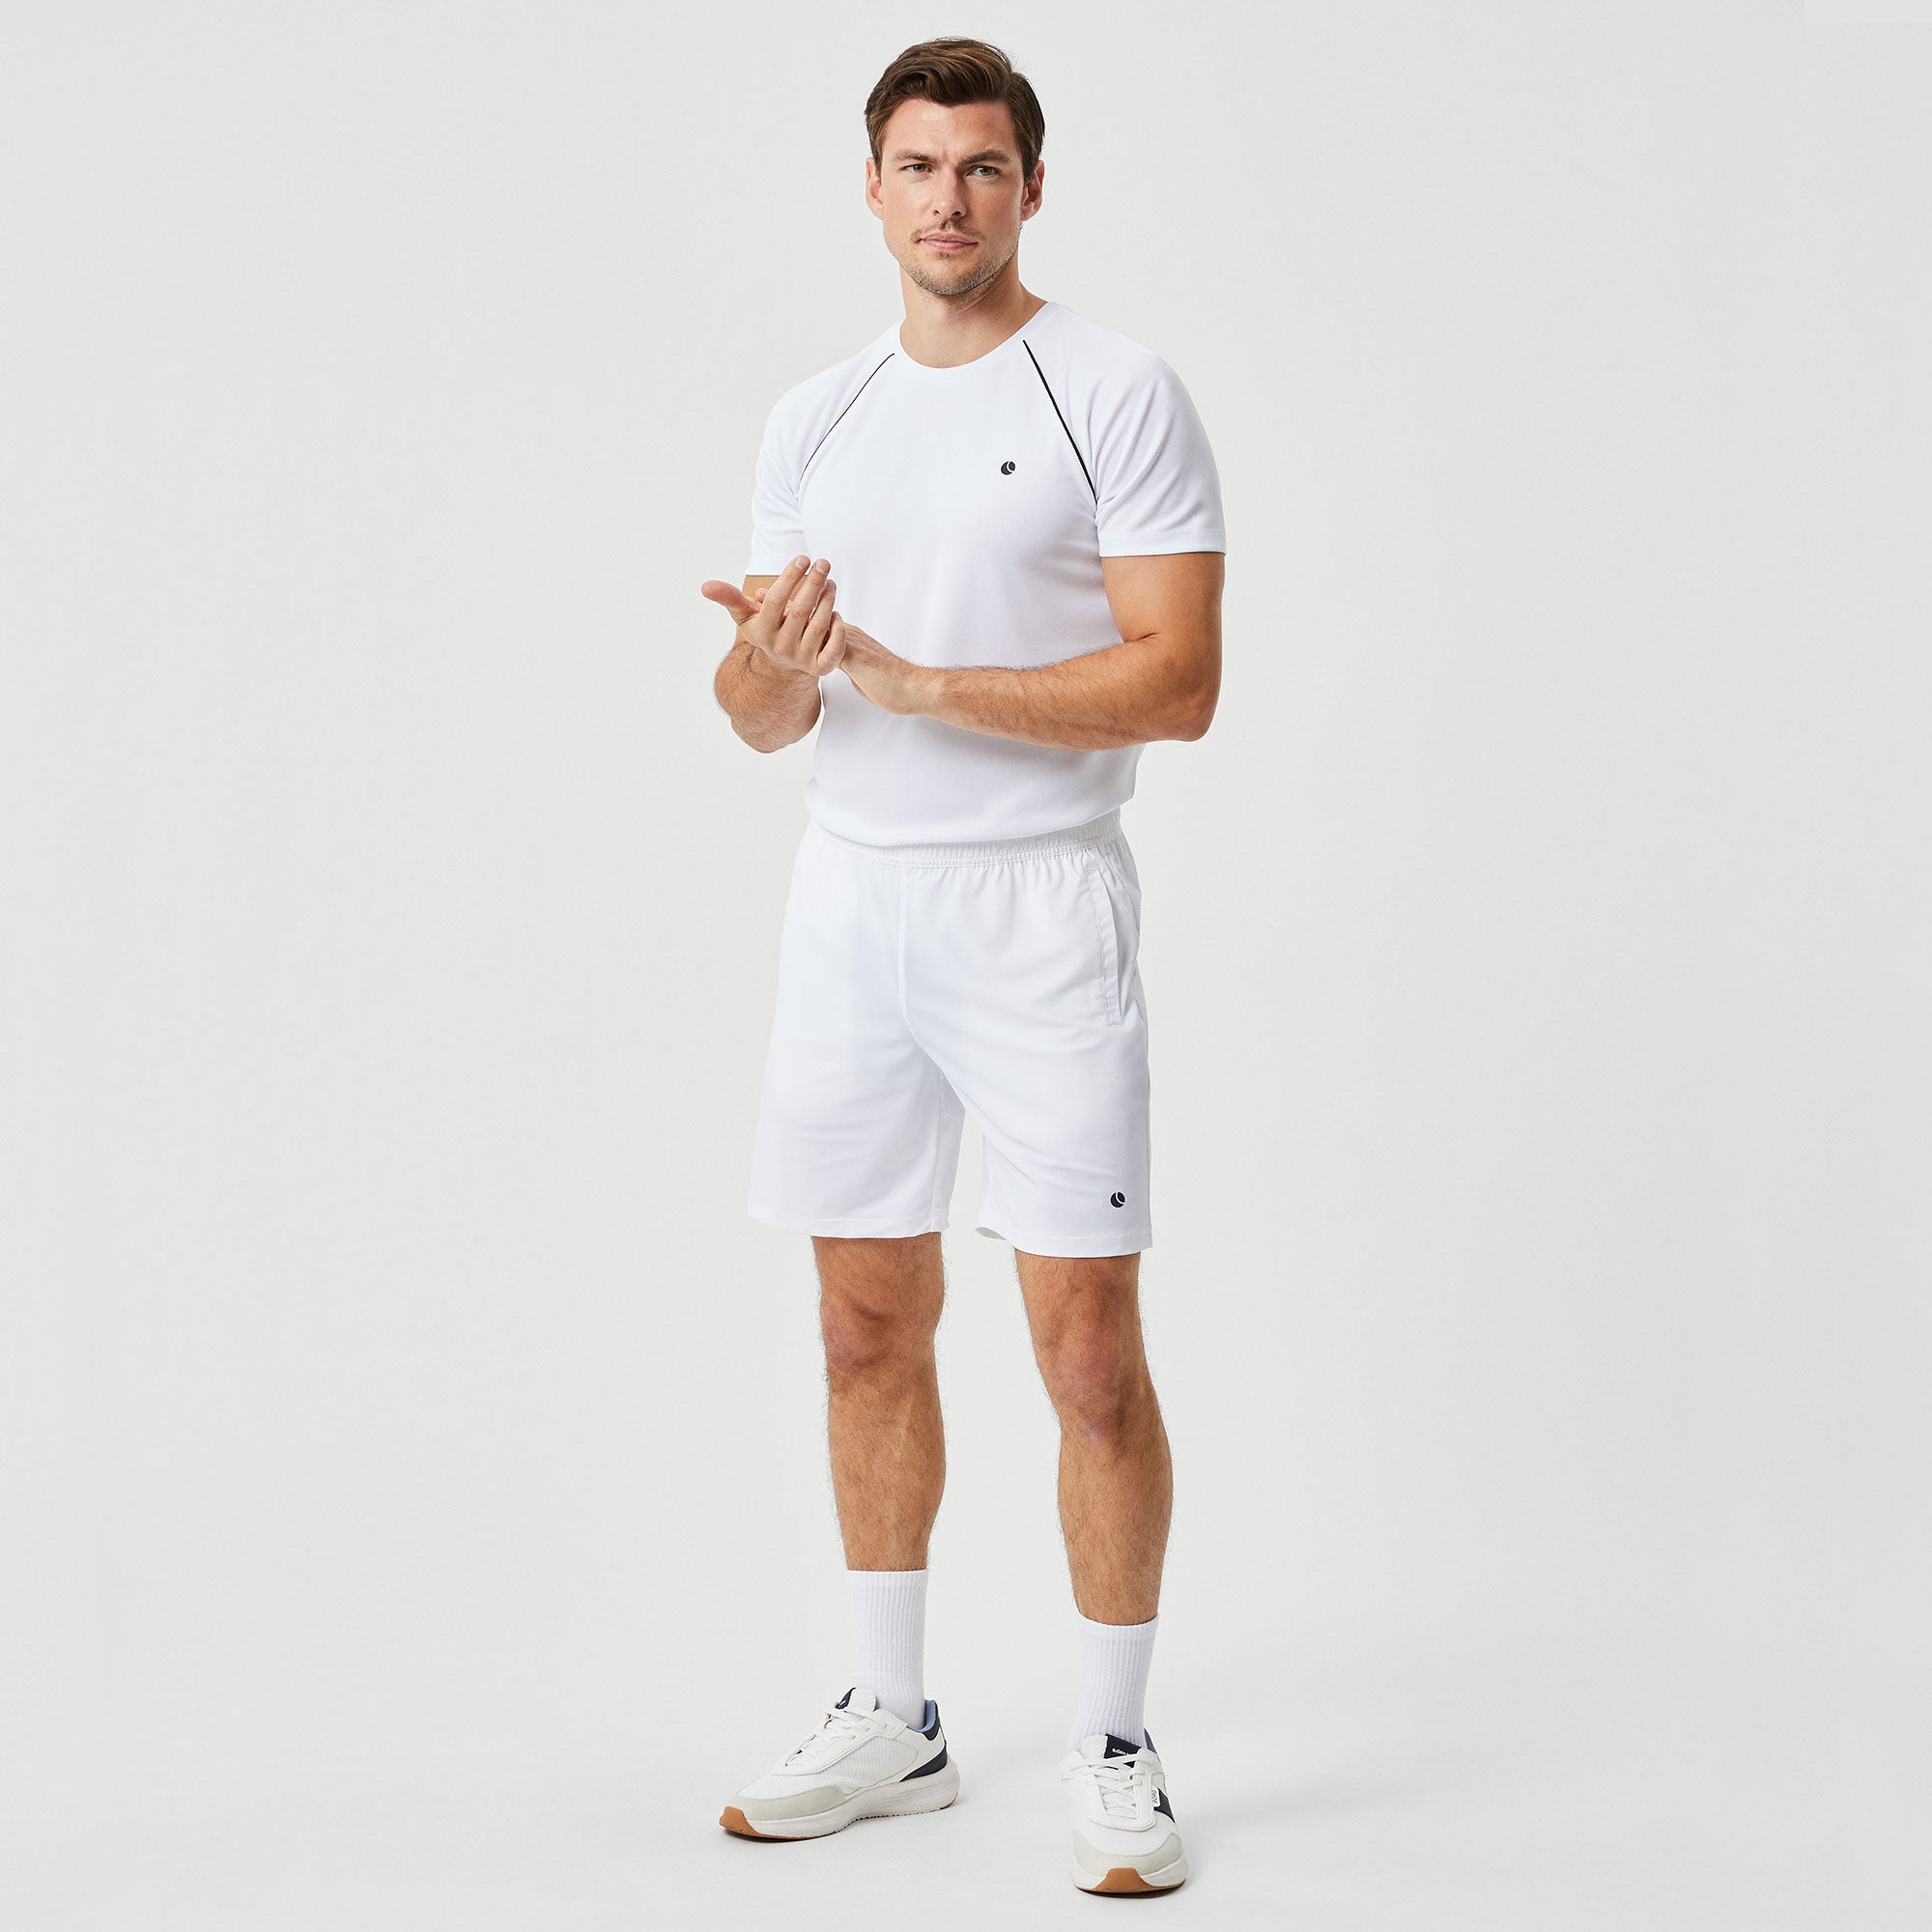 Björn Borg Ace Men's 9-Inch Tennis Shorts - White (5)